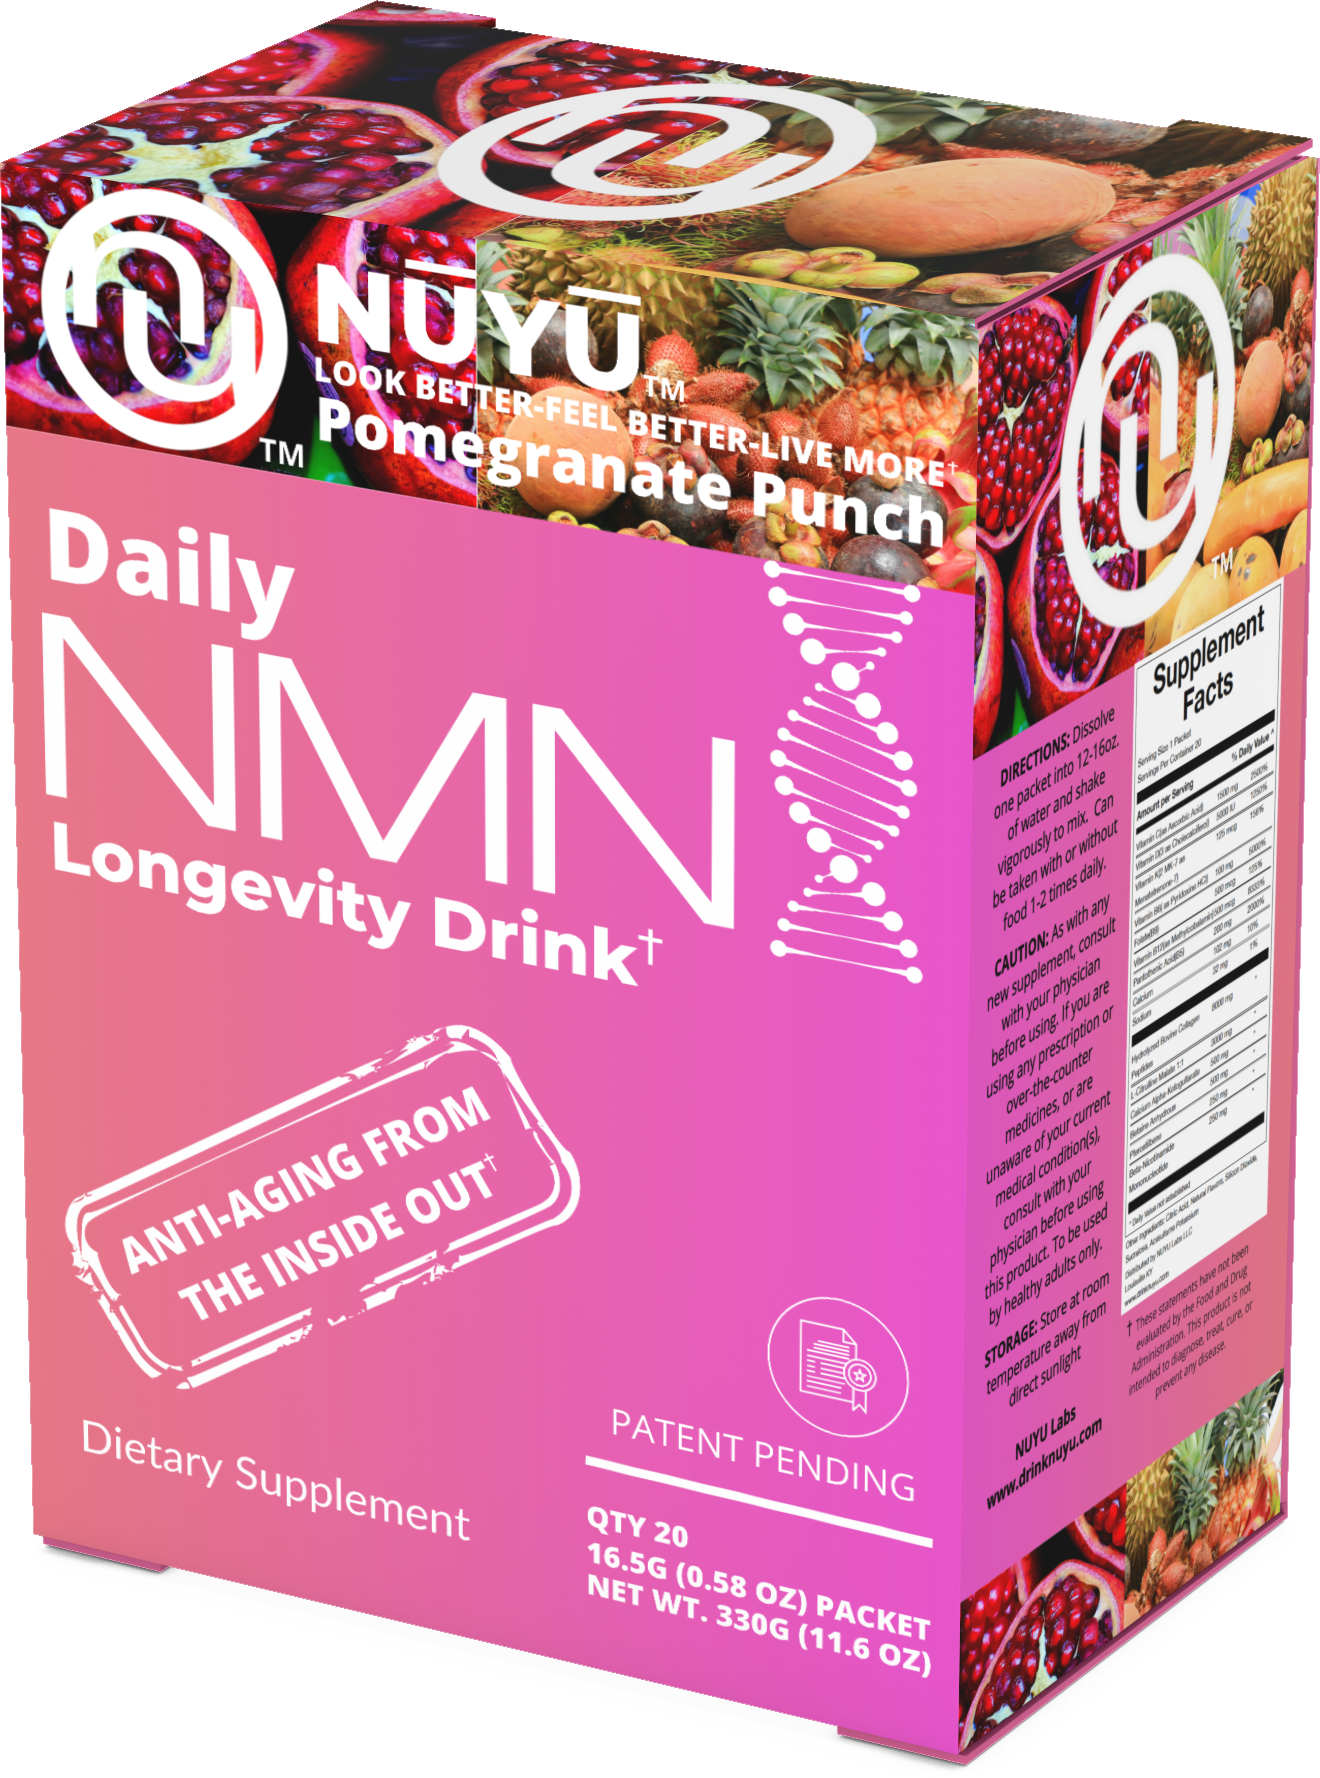 NŪYŪ Daily NMN™ Longevity Drink-Pomegranate Punch